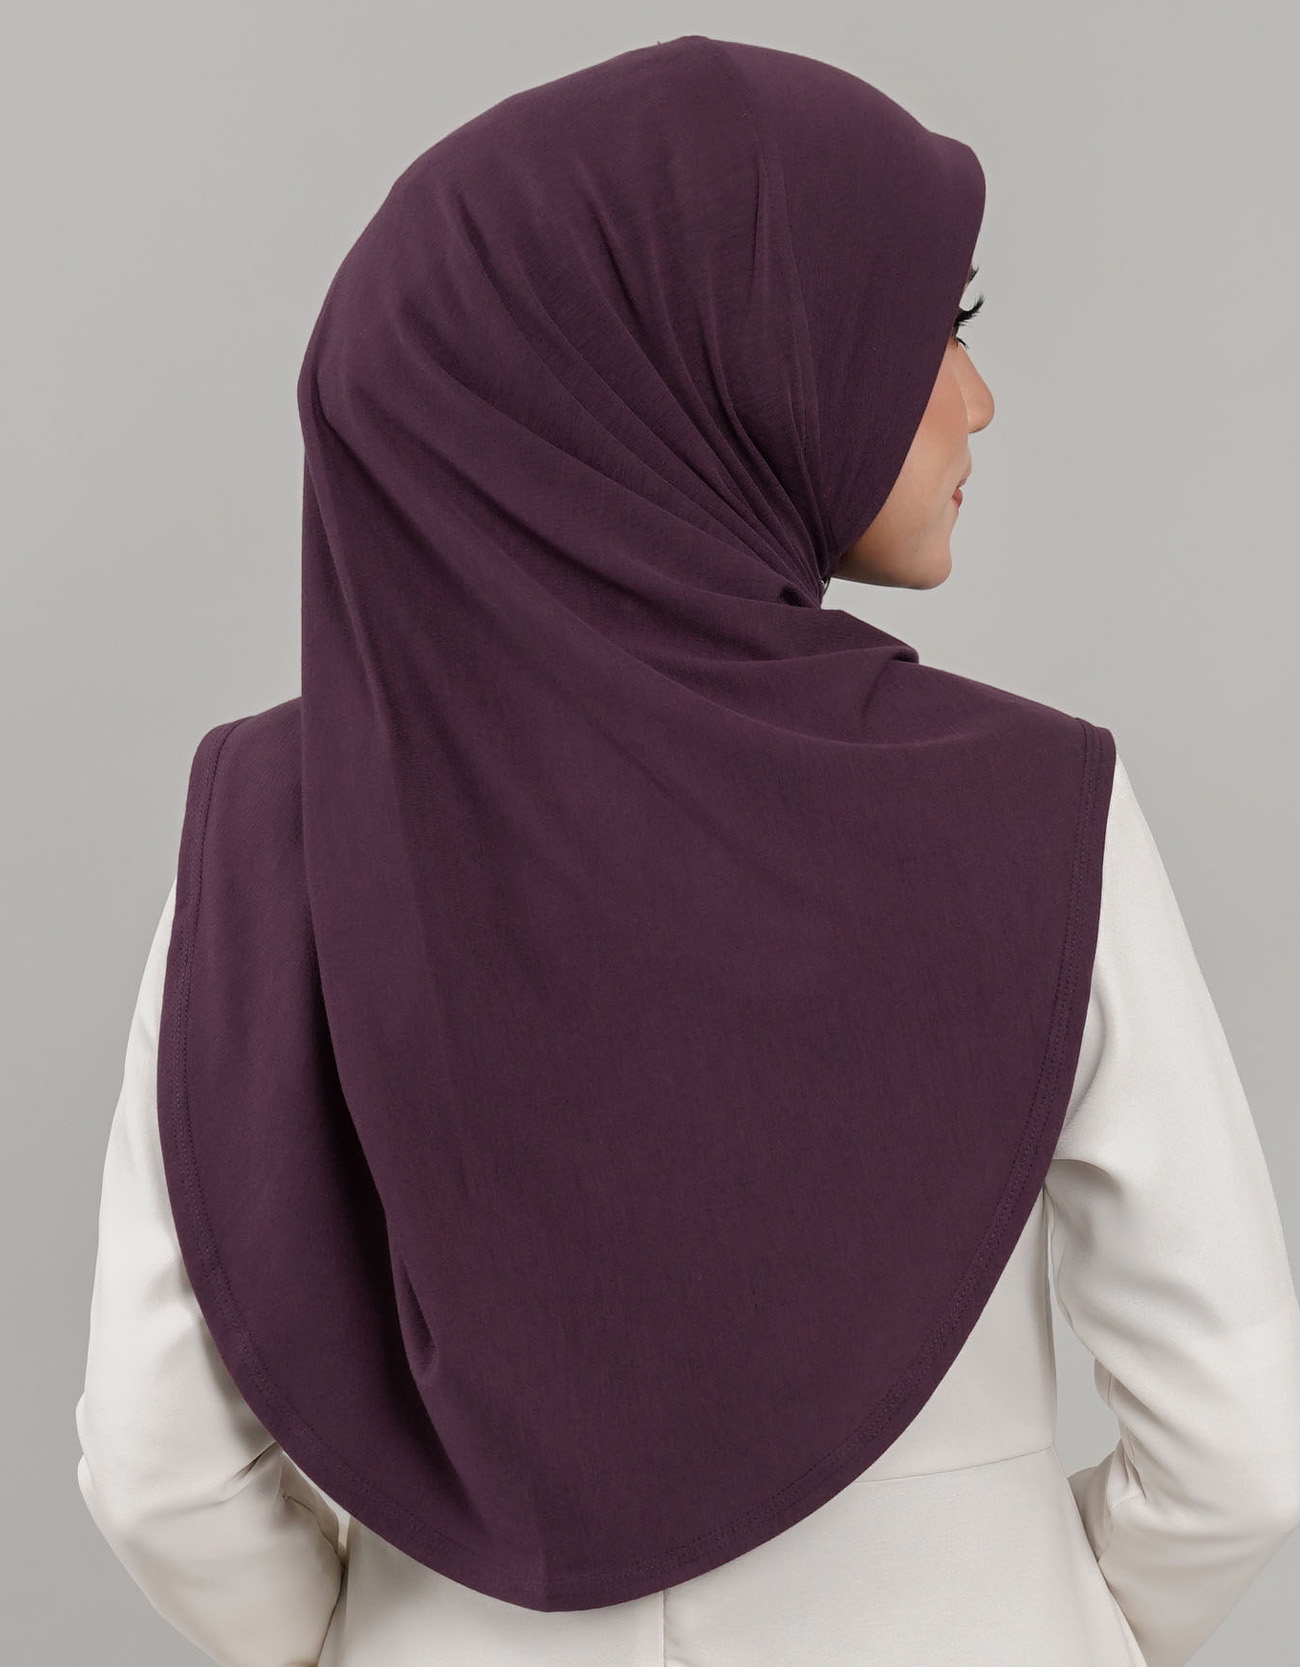 Express Hijab Damia Plain - 03 Grape